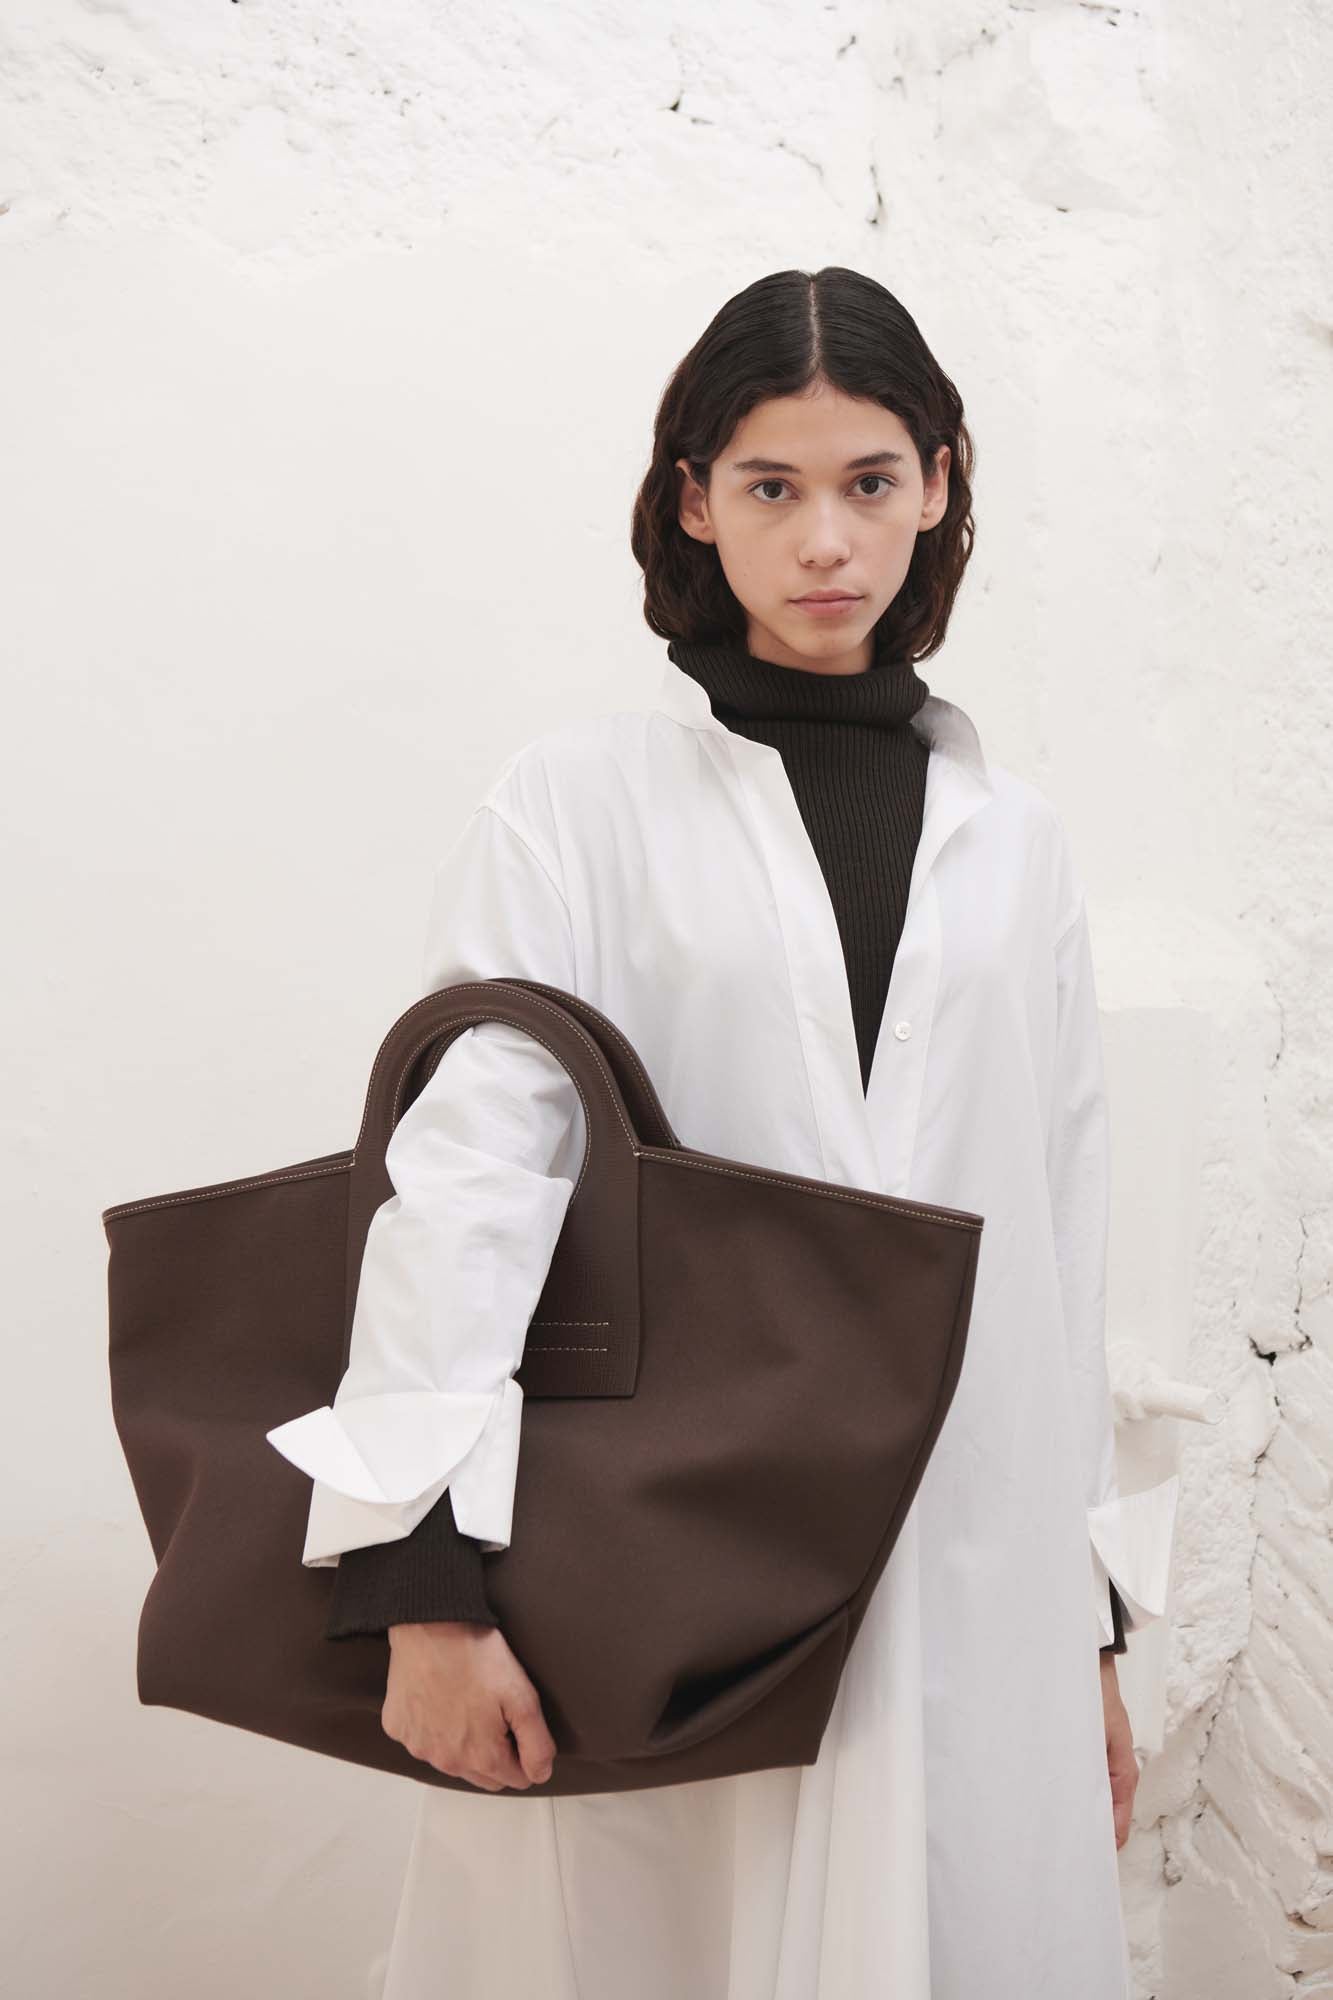 CALA L GRAINY - Canvas-Leather Tote Bag